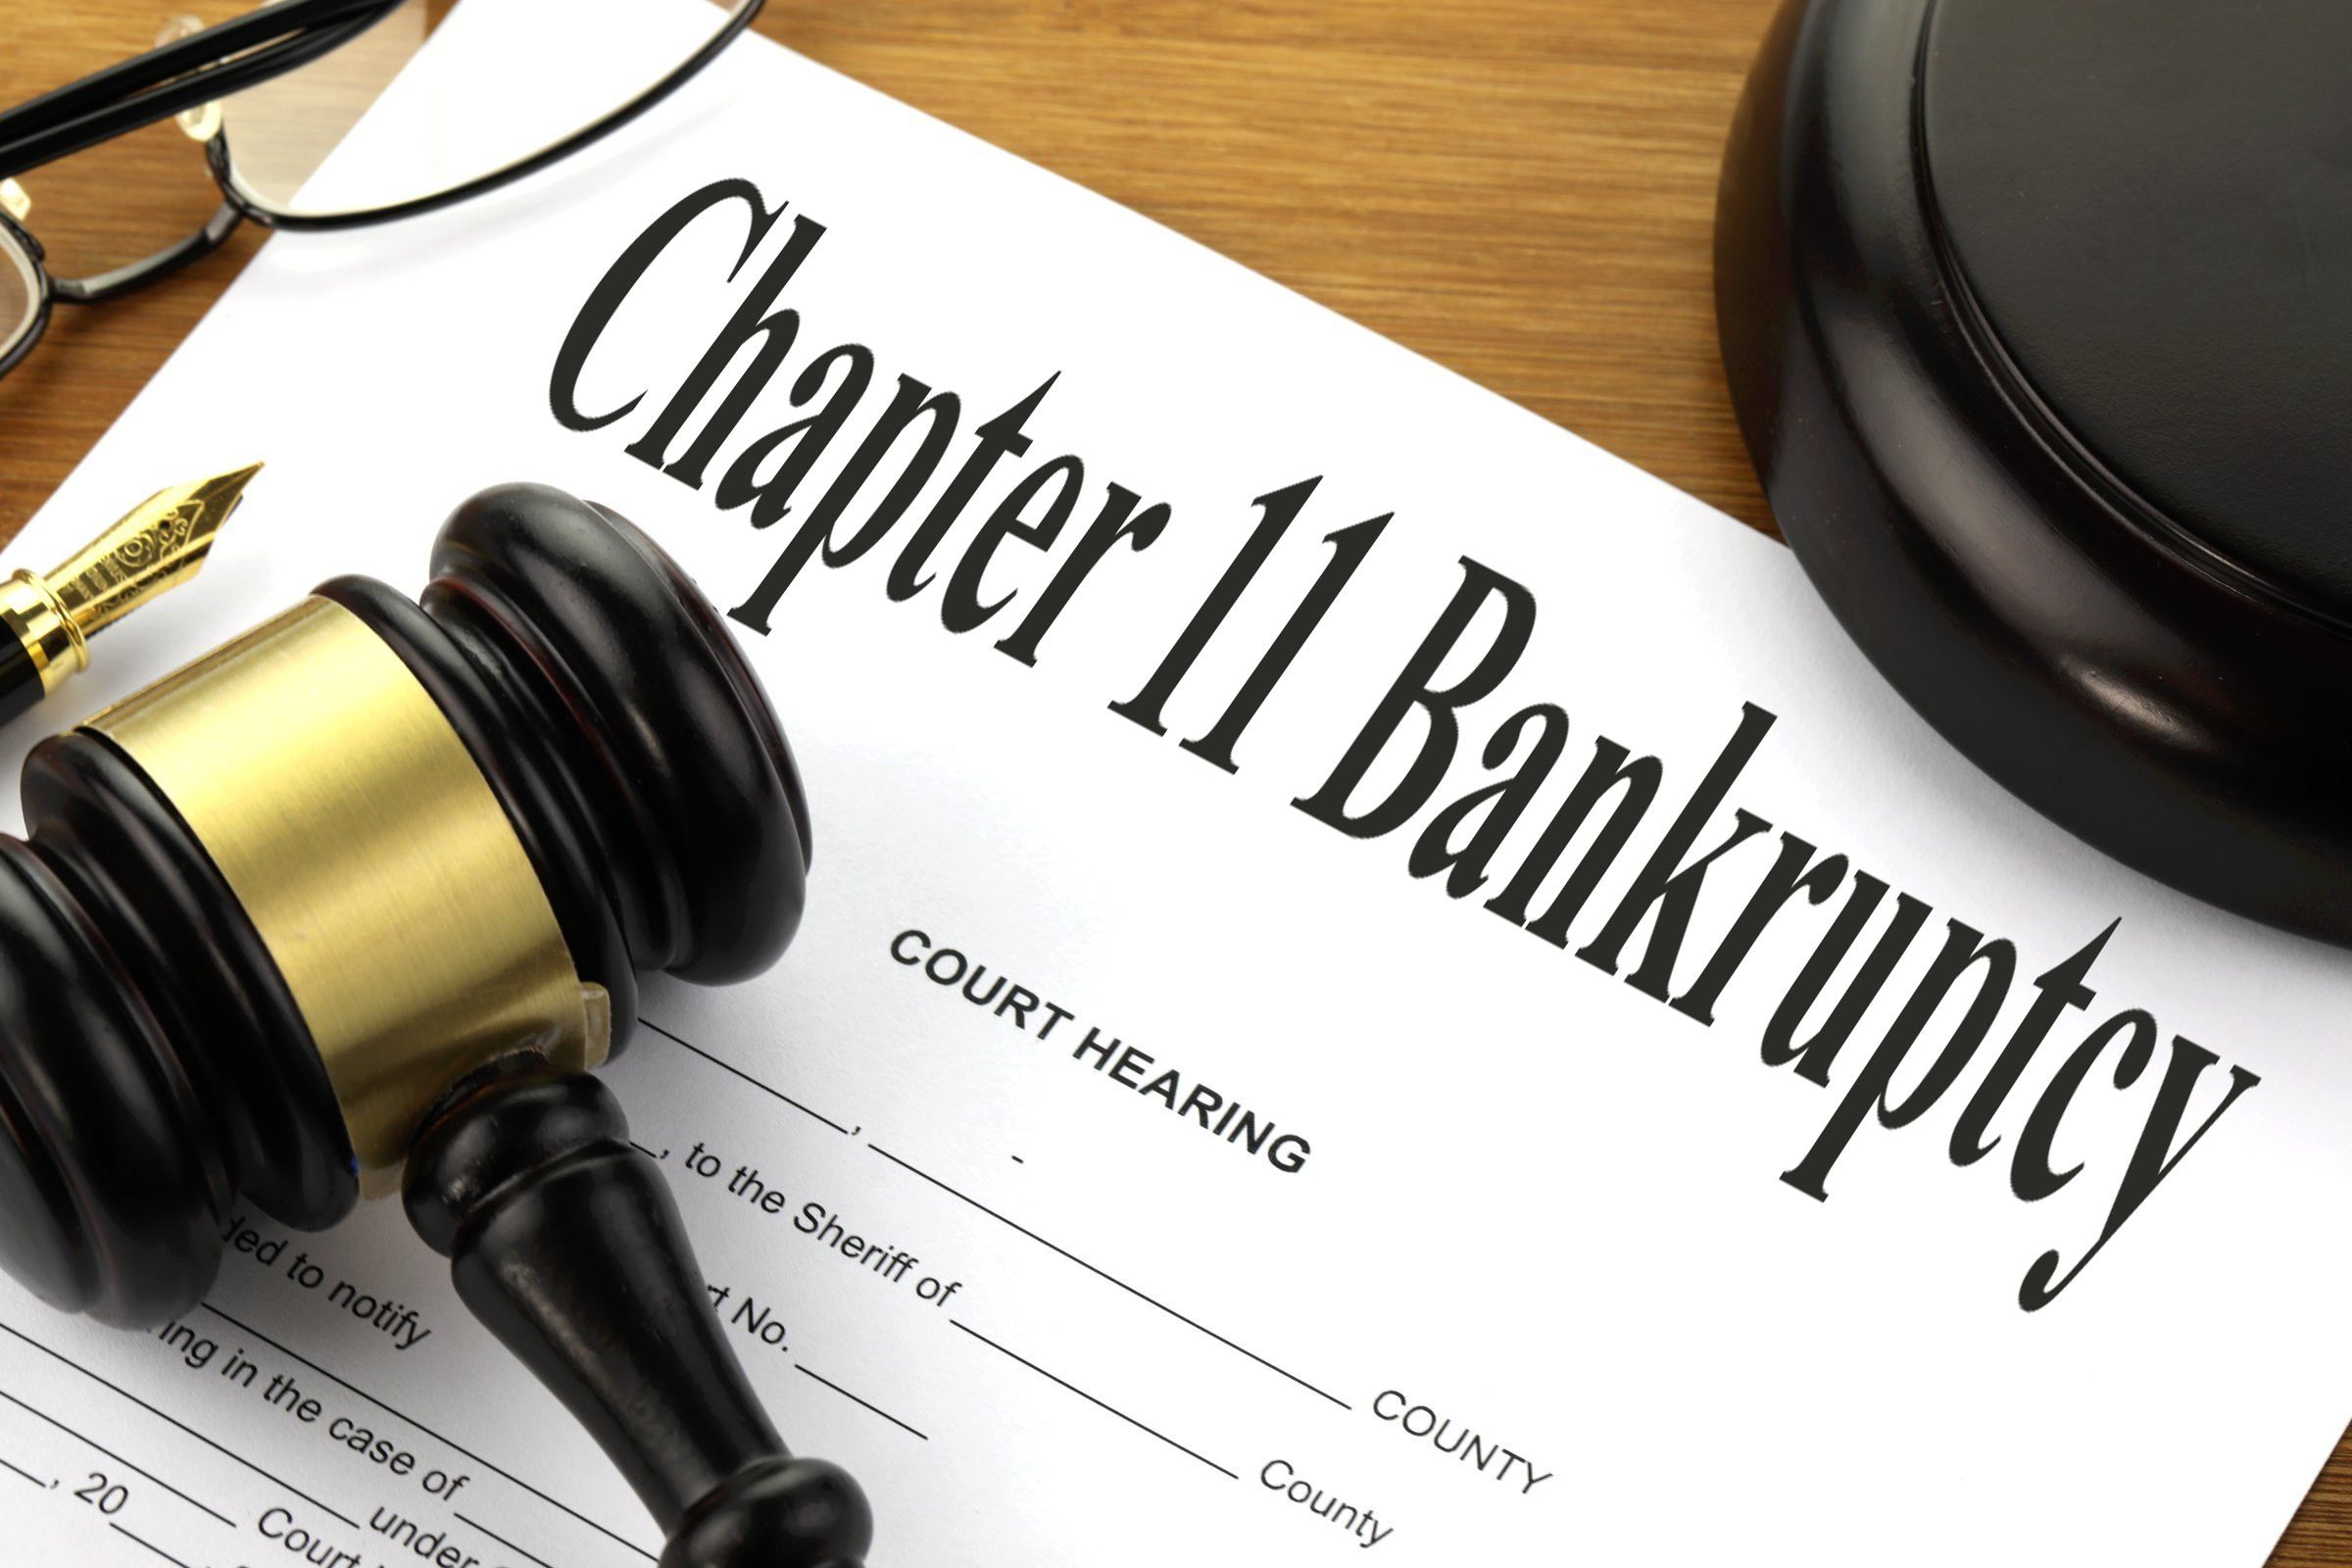 Chapter 11 Bankruptcies